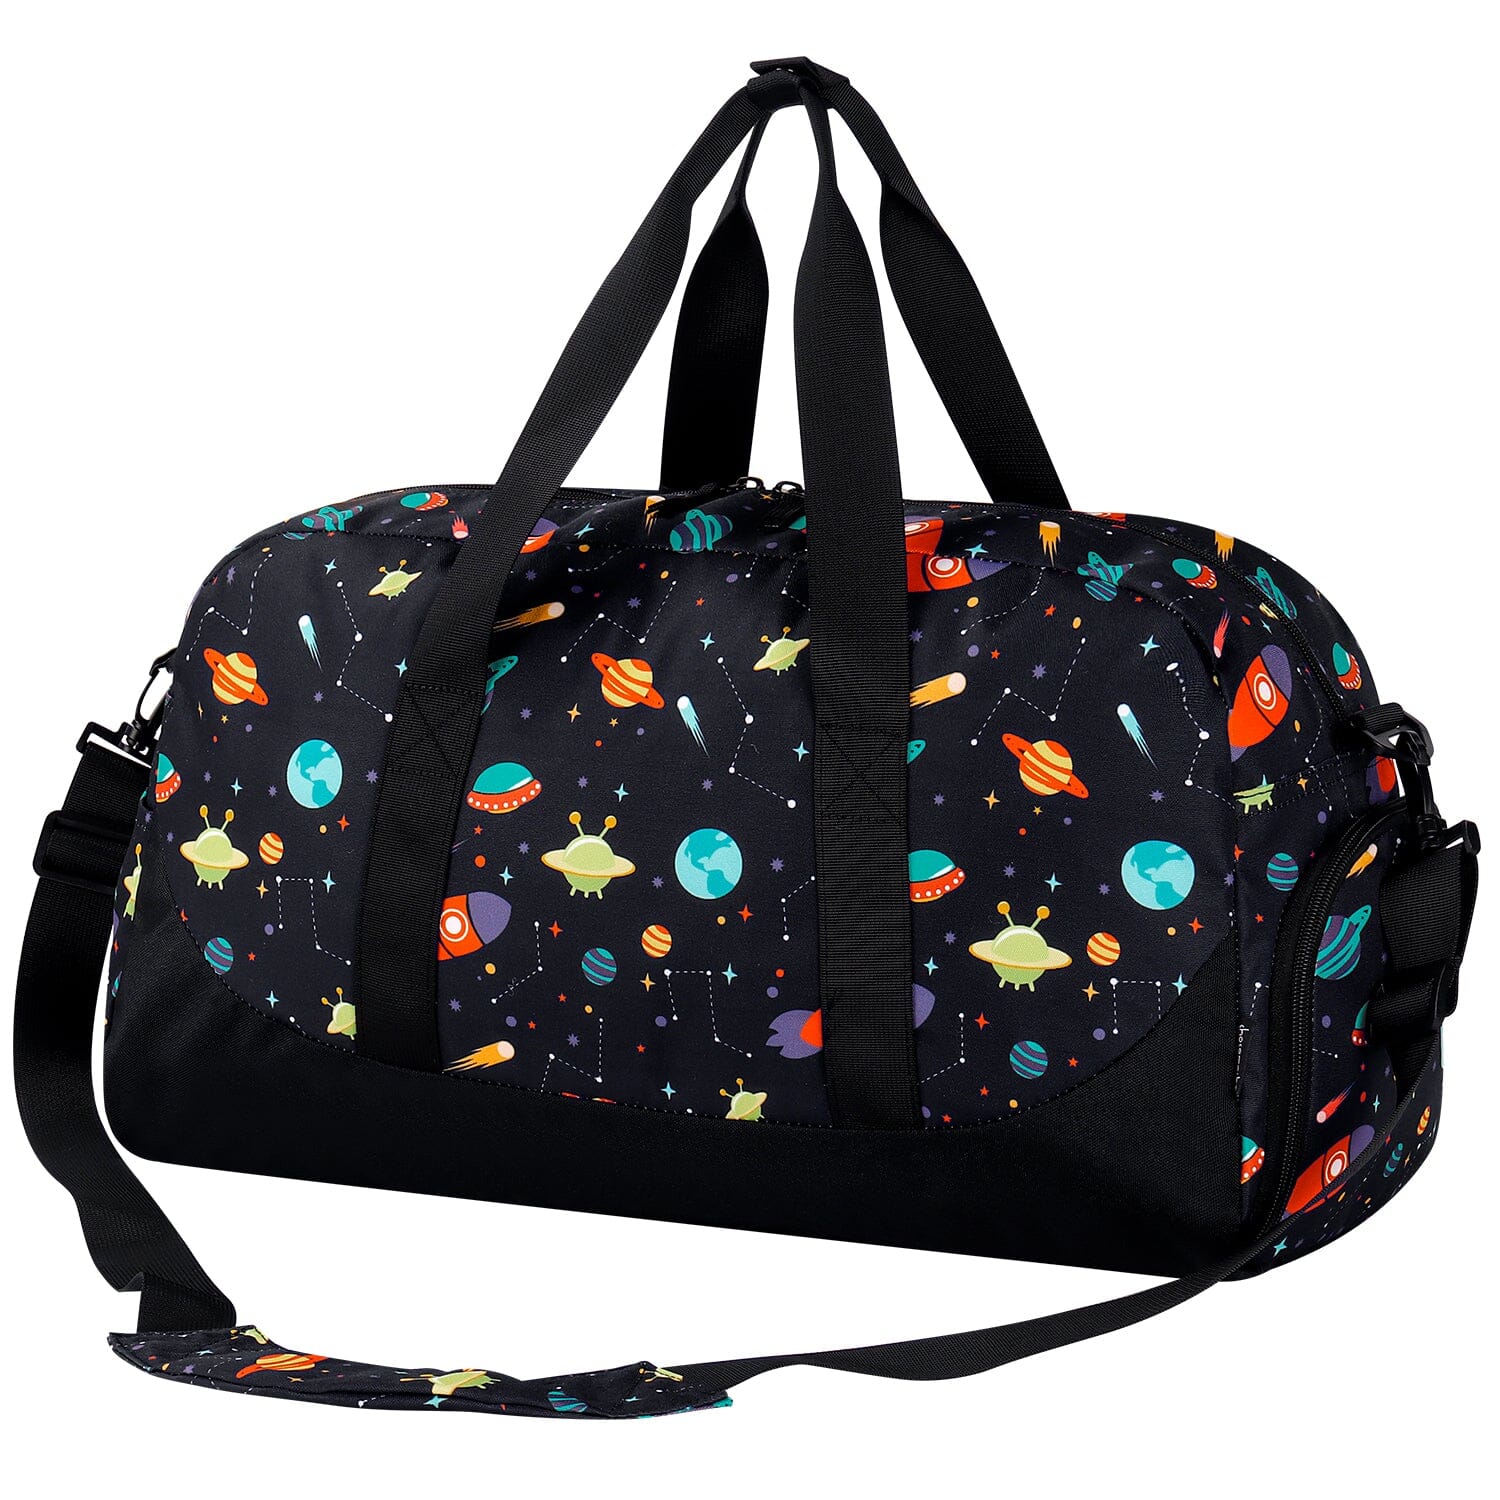 Choco Mocha Kids Galaxy Duffle Bag for Boys, Black Weekend Bag for Kids 20.08*9.06*10.63 inches chocomochakids 